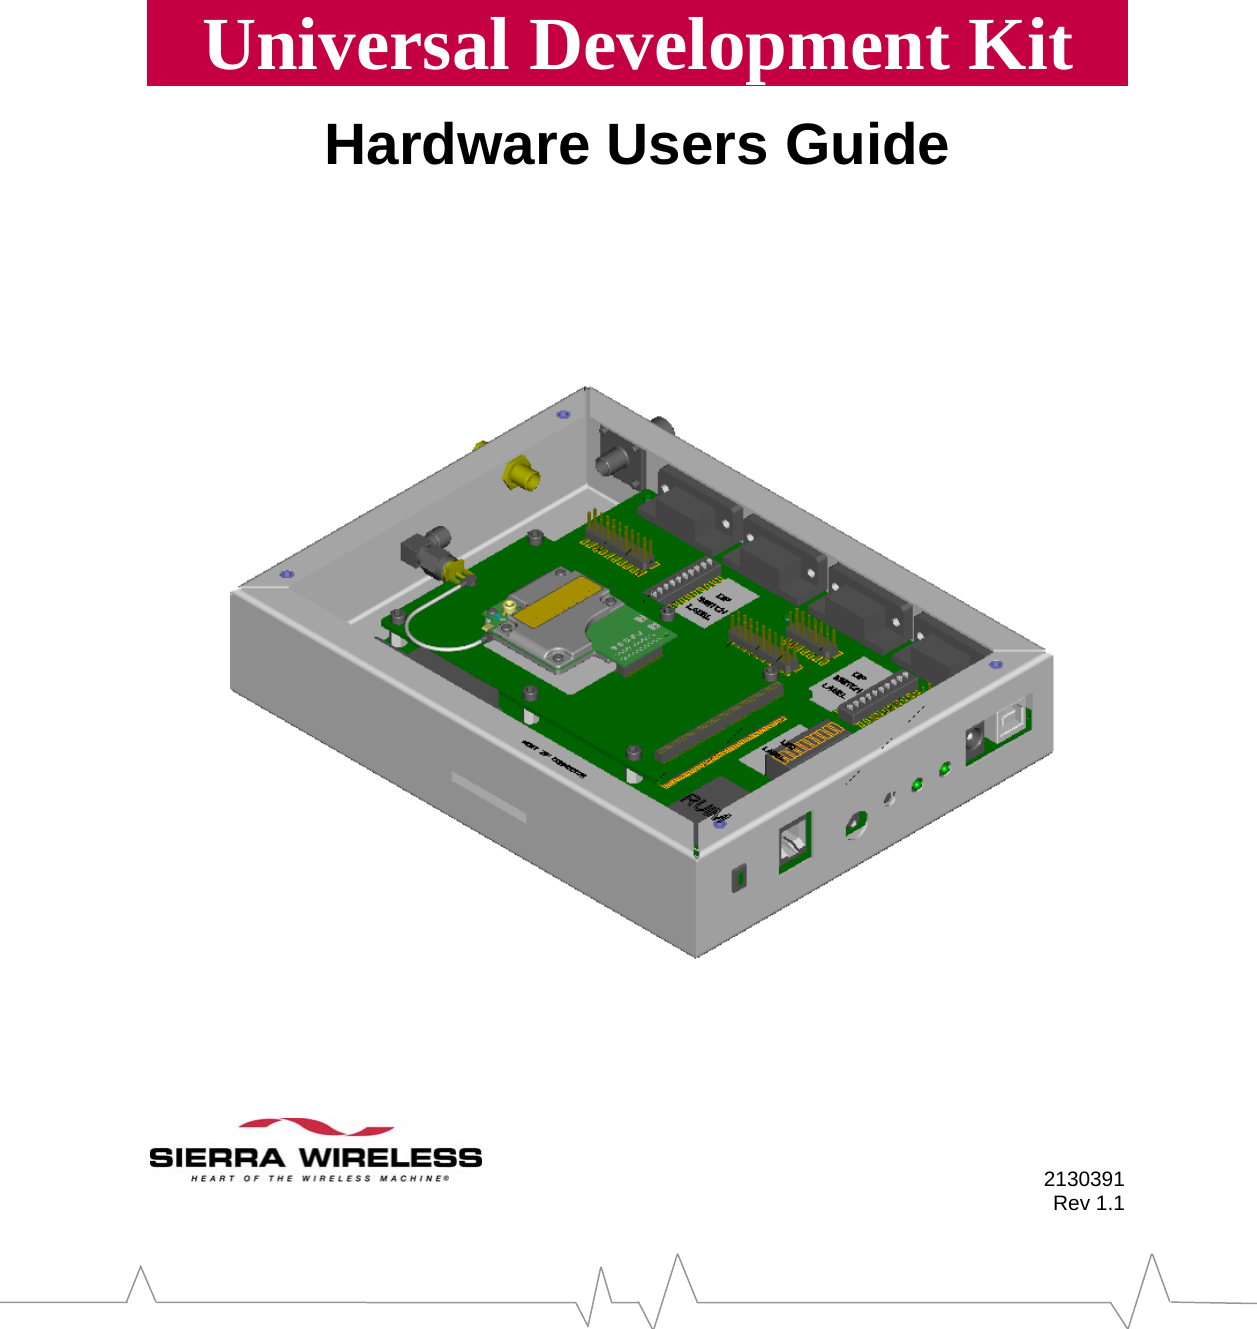      Universal Development Kit  Hardware Users Guide                             2130391 Rev 1.1  